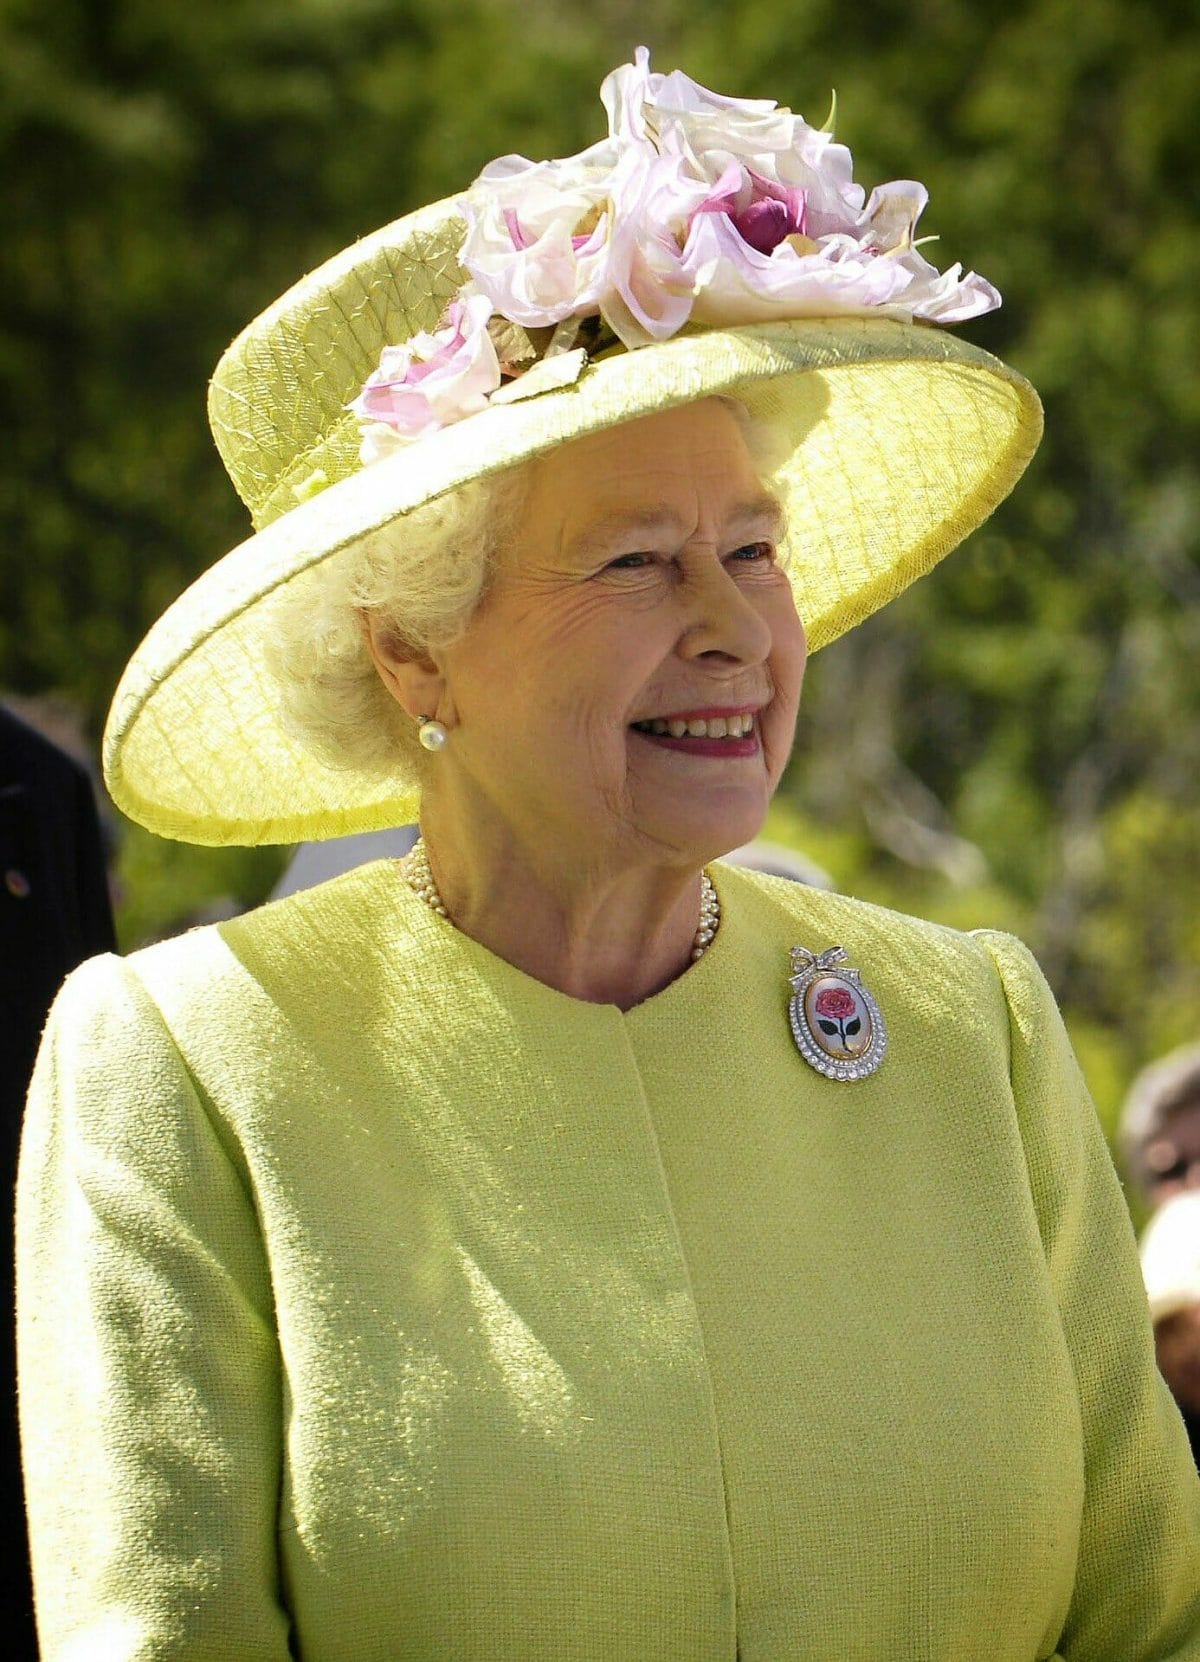 Statement regarding the death of Her Majesty Queen Elizabeth II